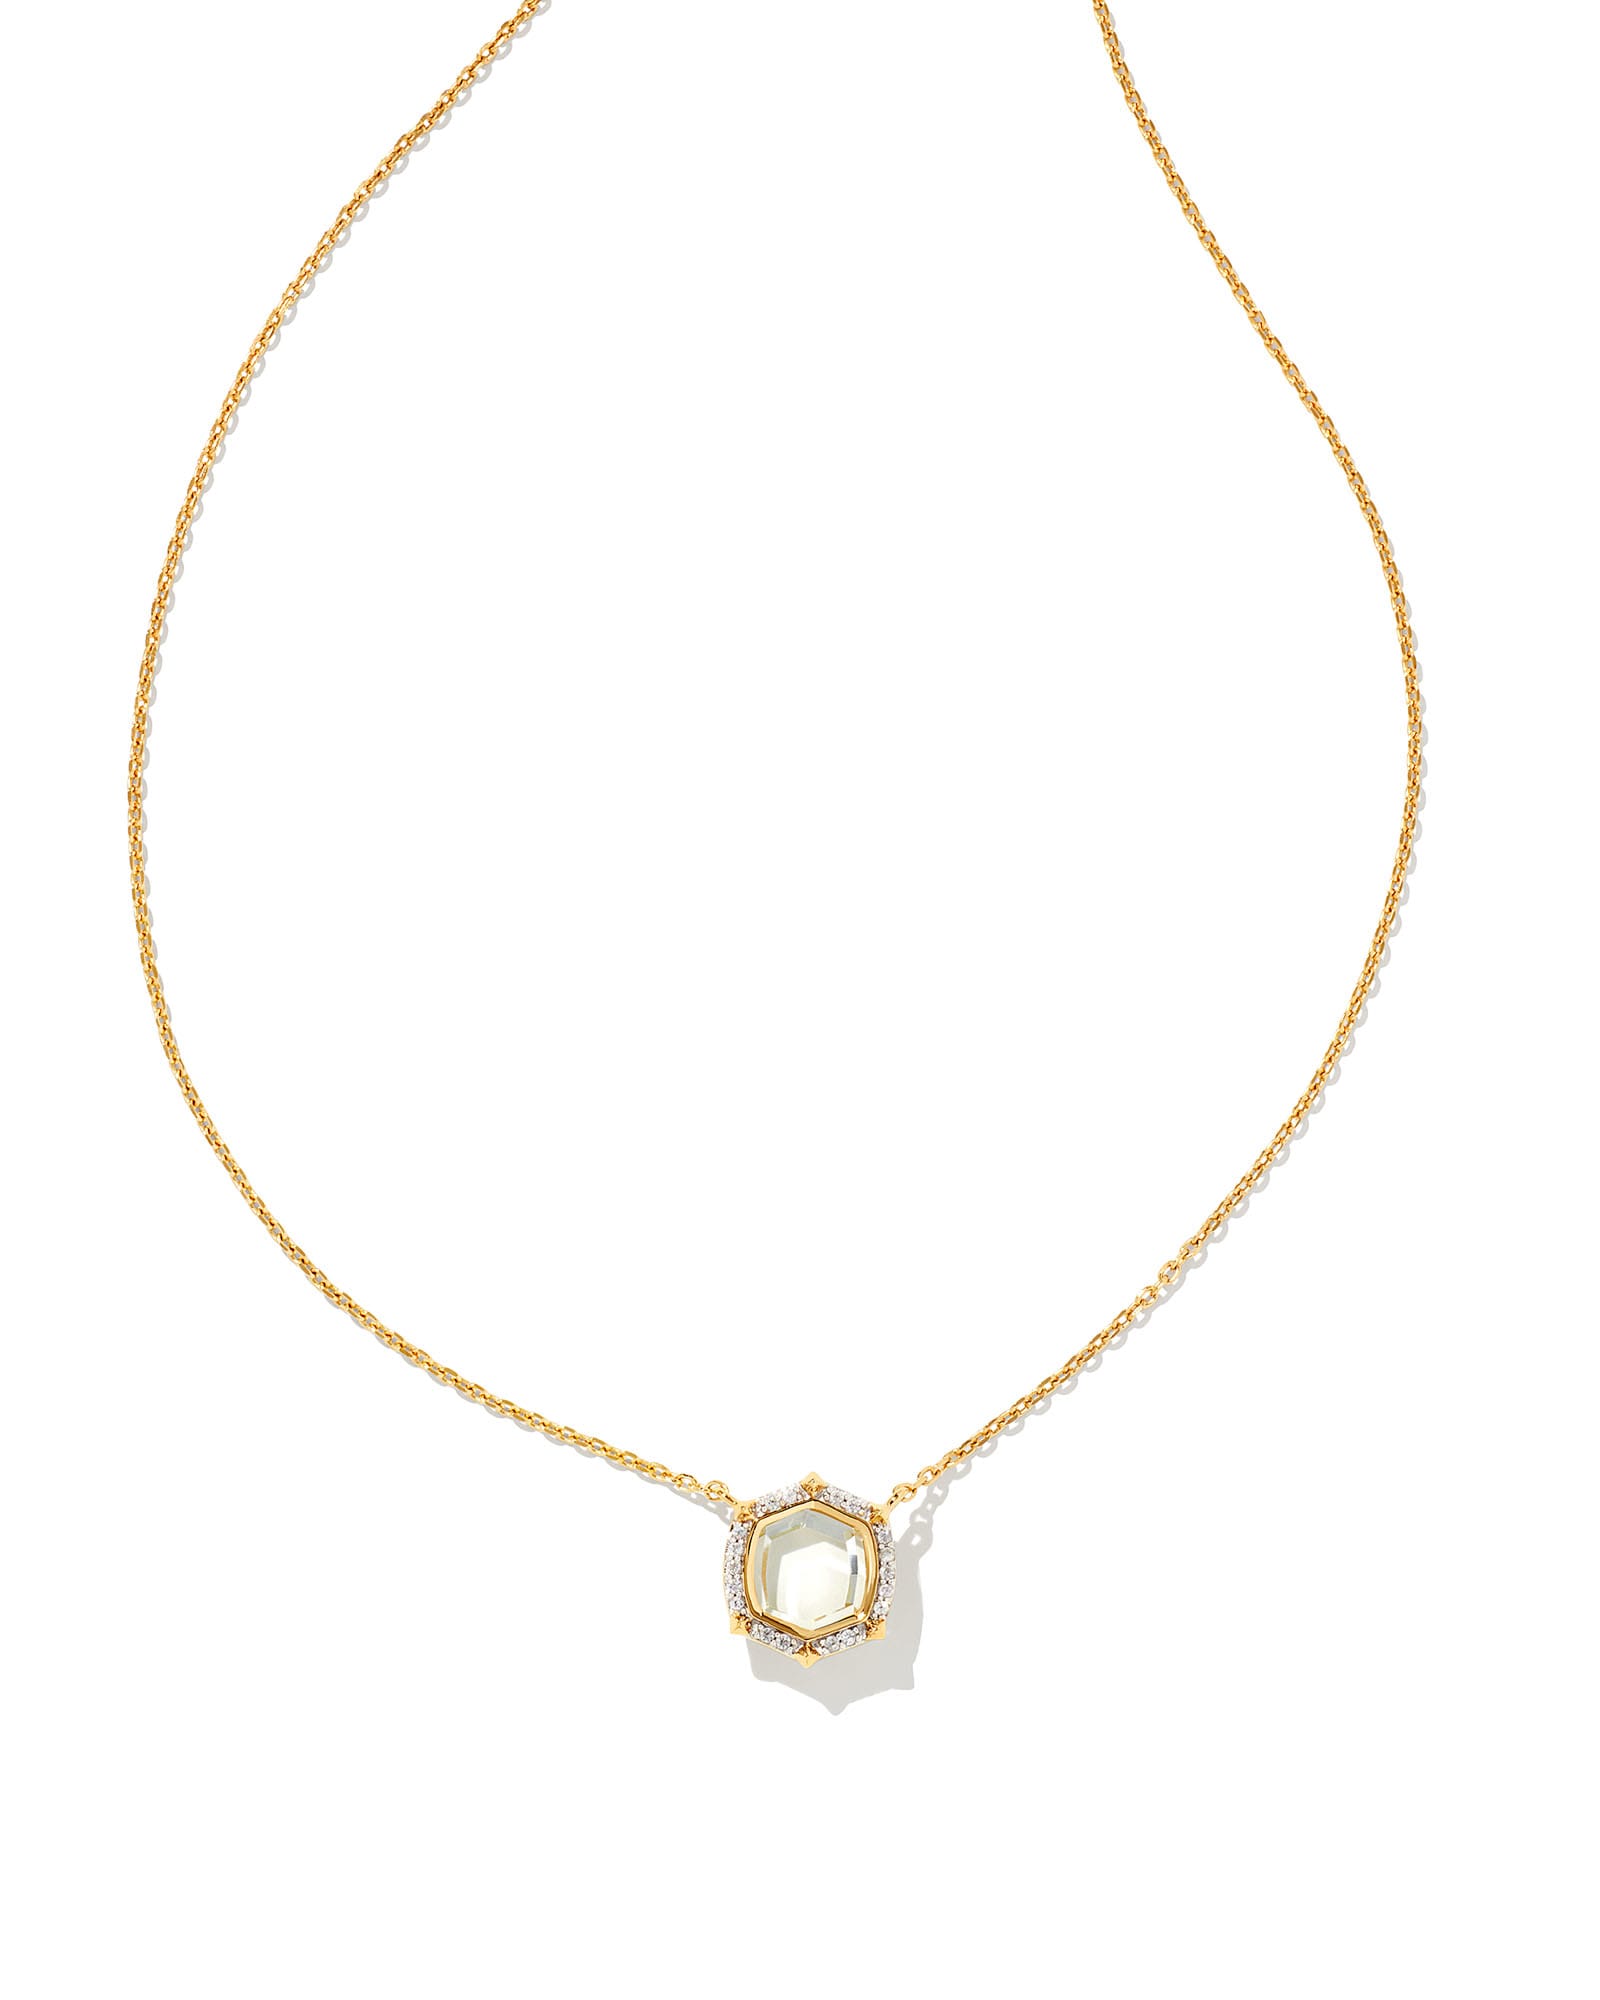 Kendra Scott 18k Gold Vermeil Open Star Pendant Necklace